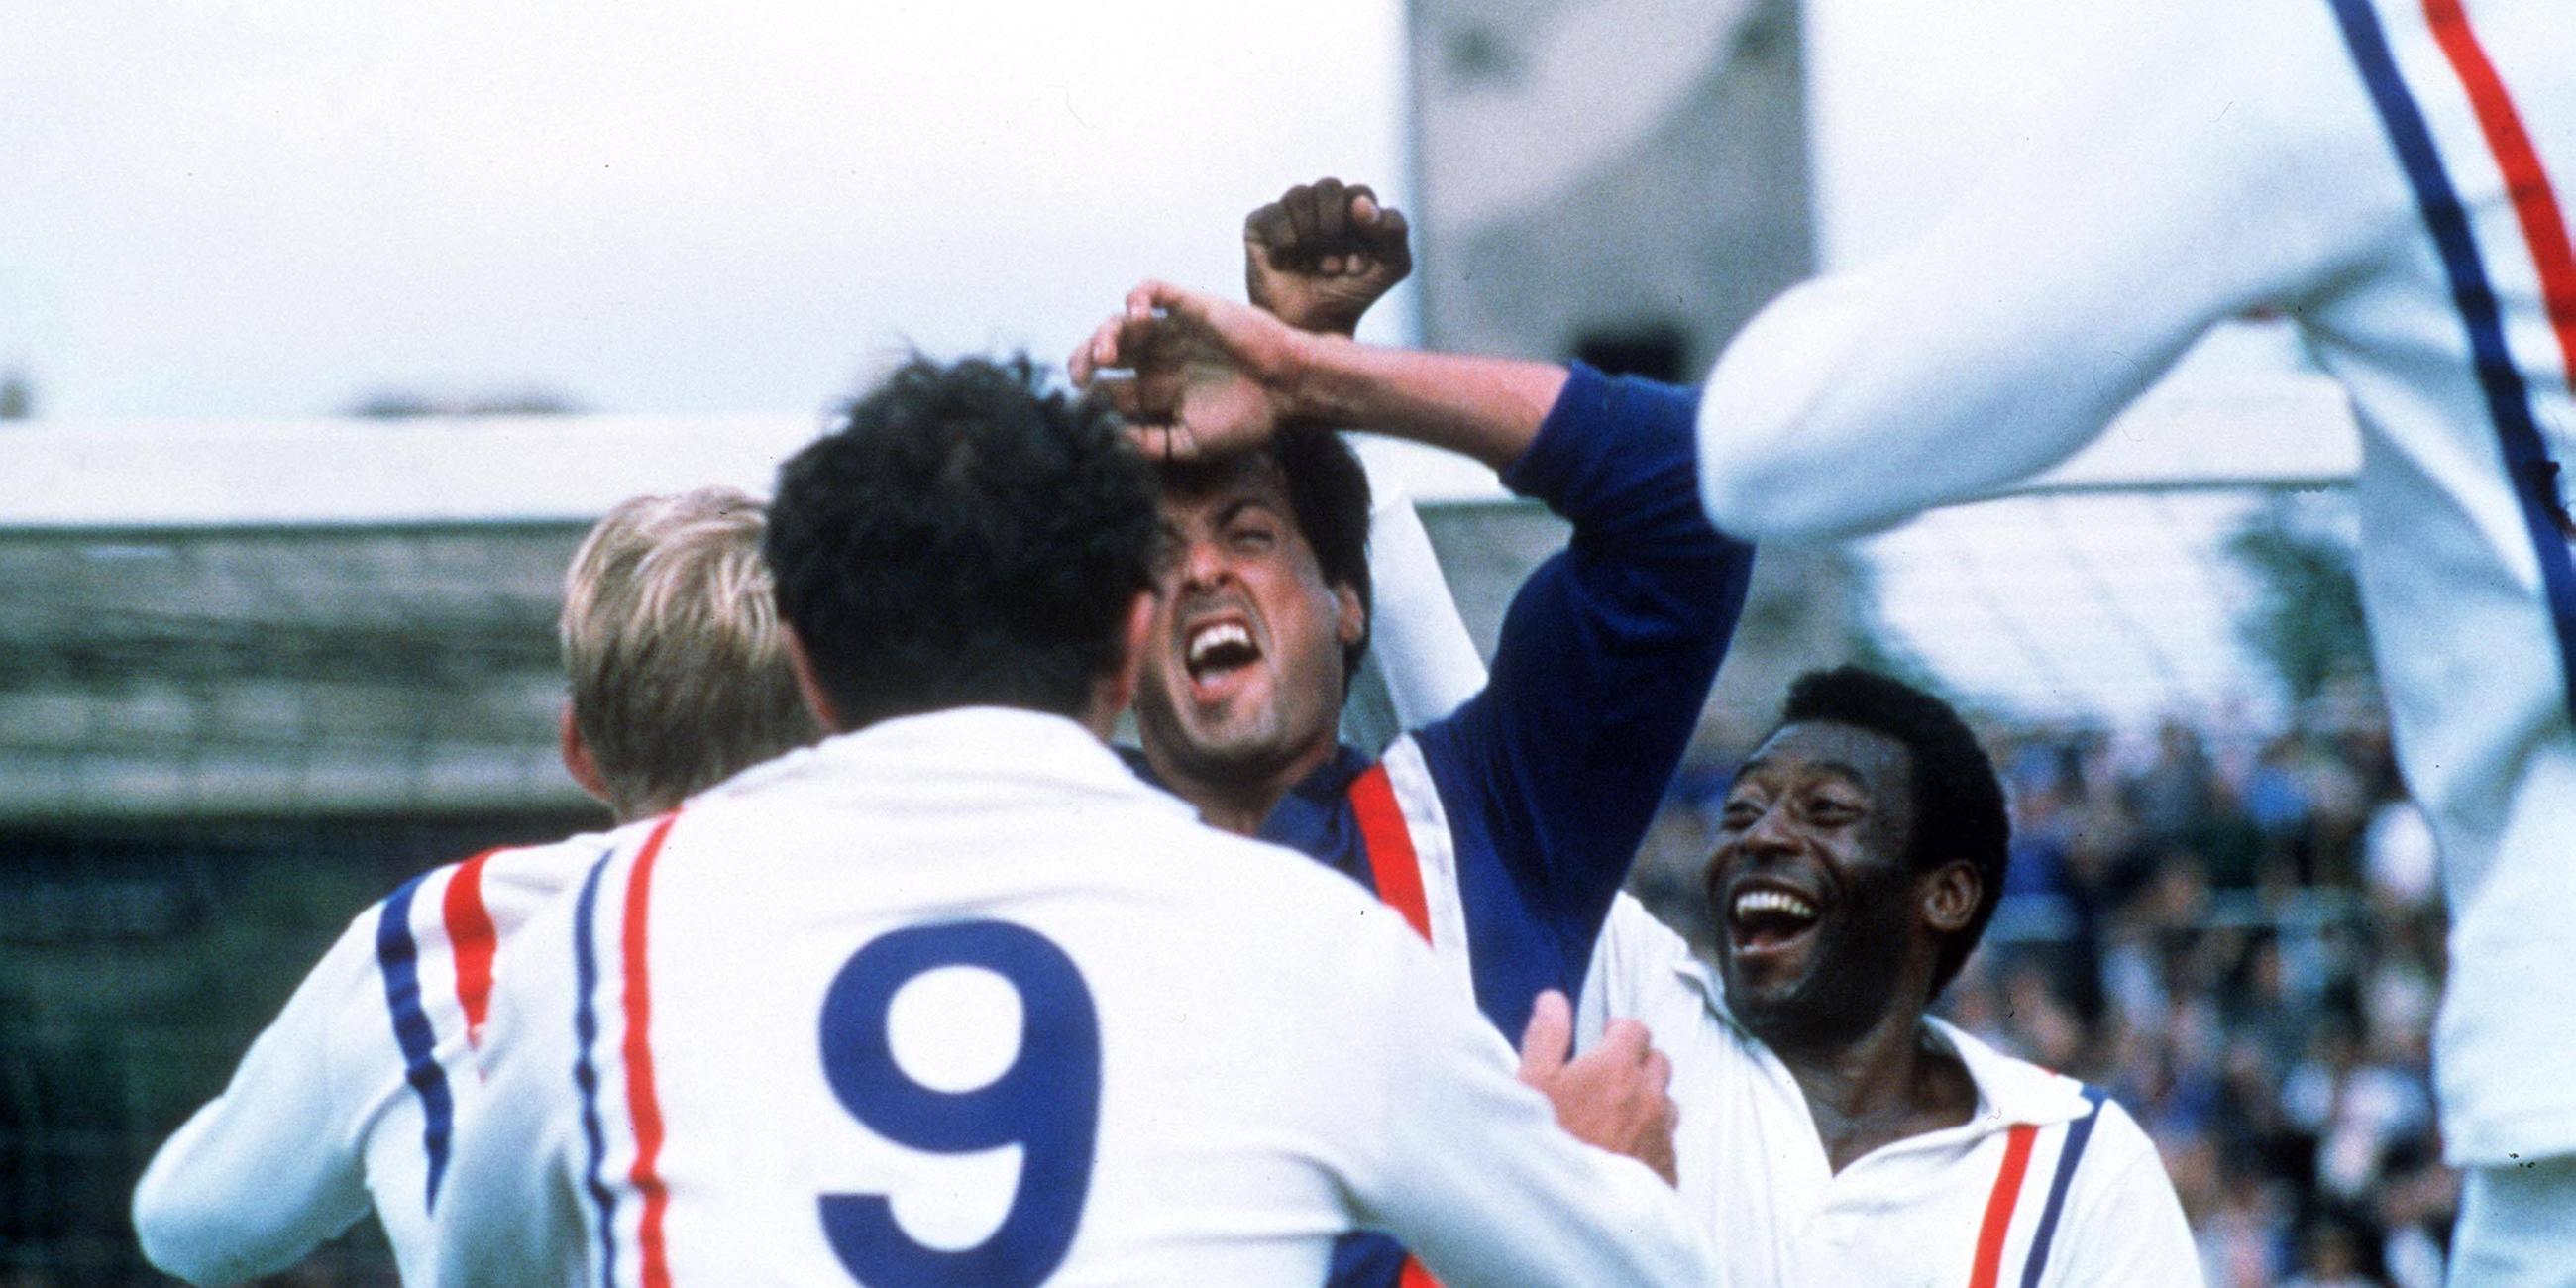 Pelé im Film "Victory" neben Sylvester Stallone